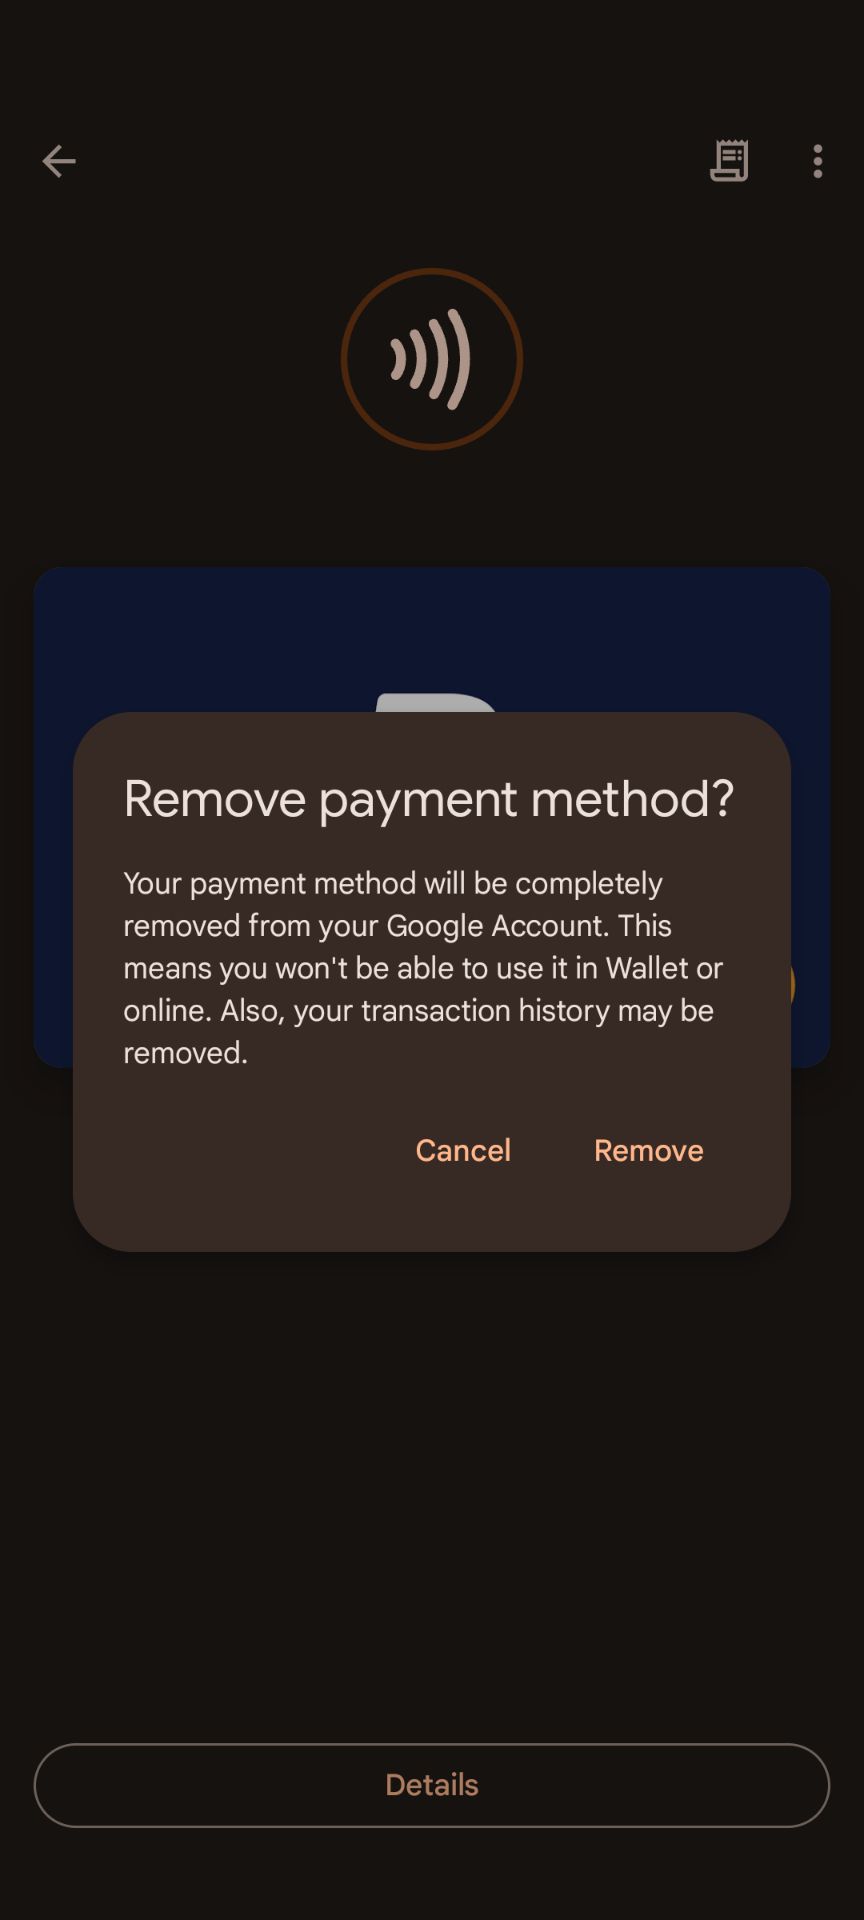 O pop-up remover método de pagamento no aplicativo Google Wallet